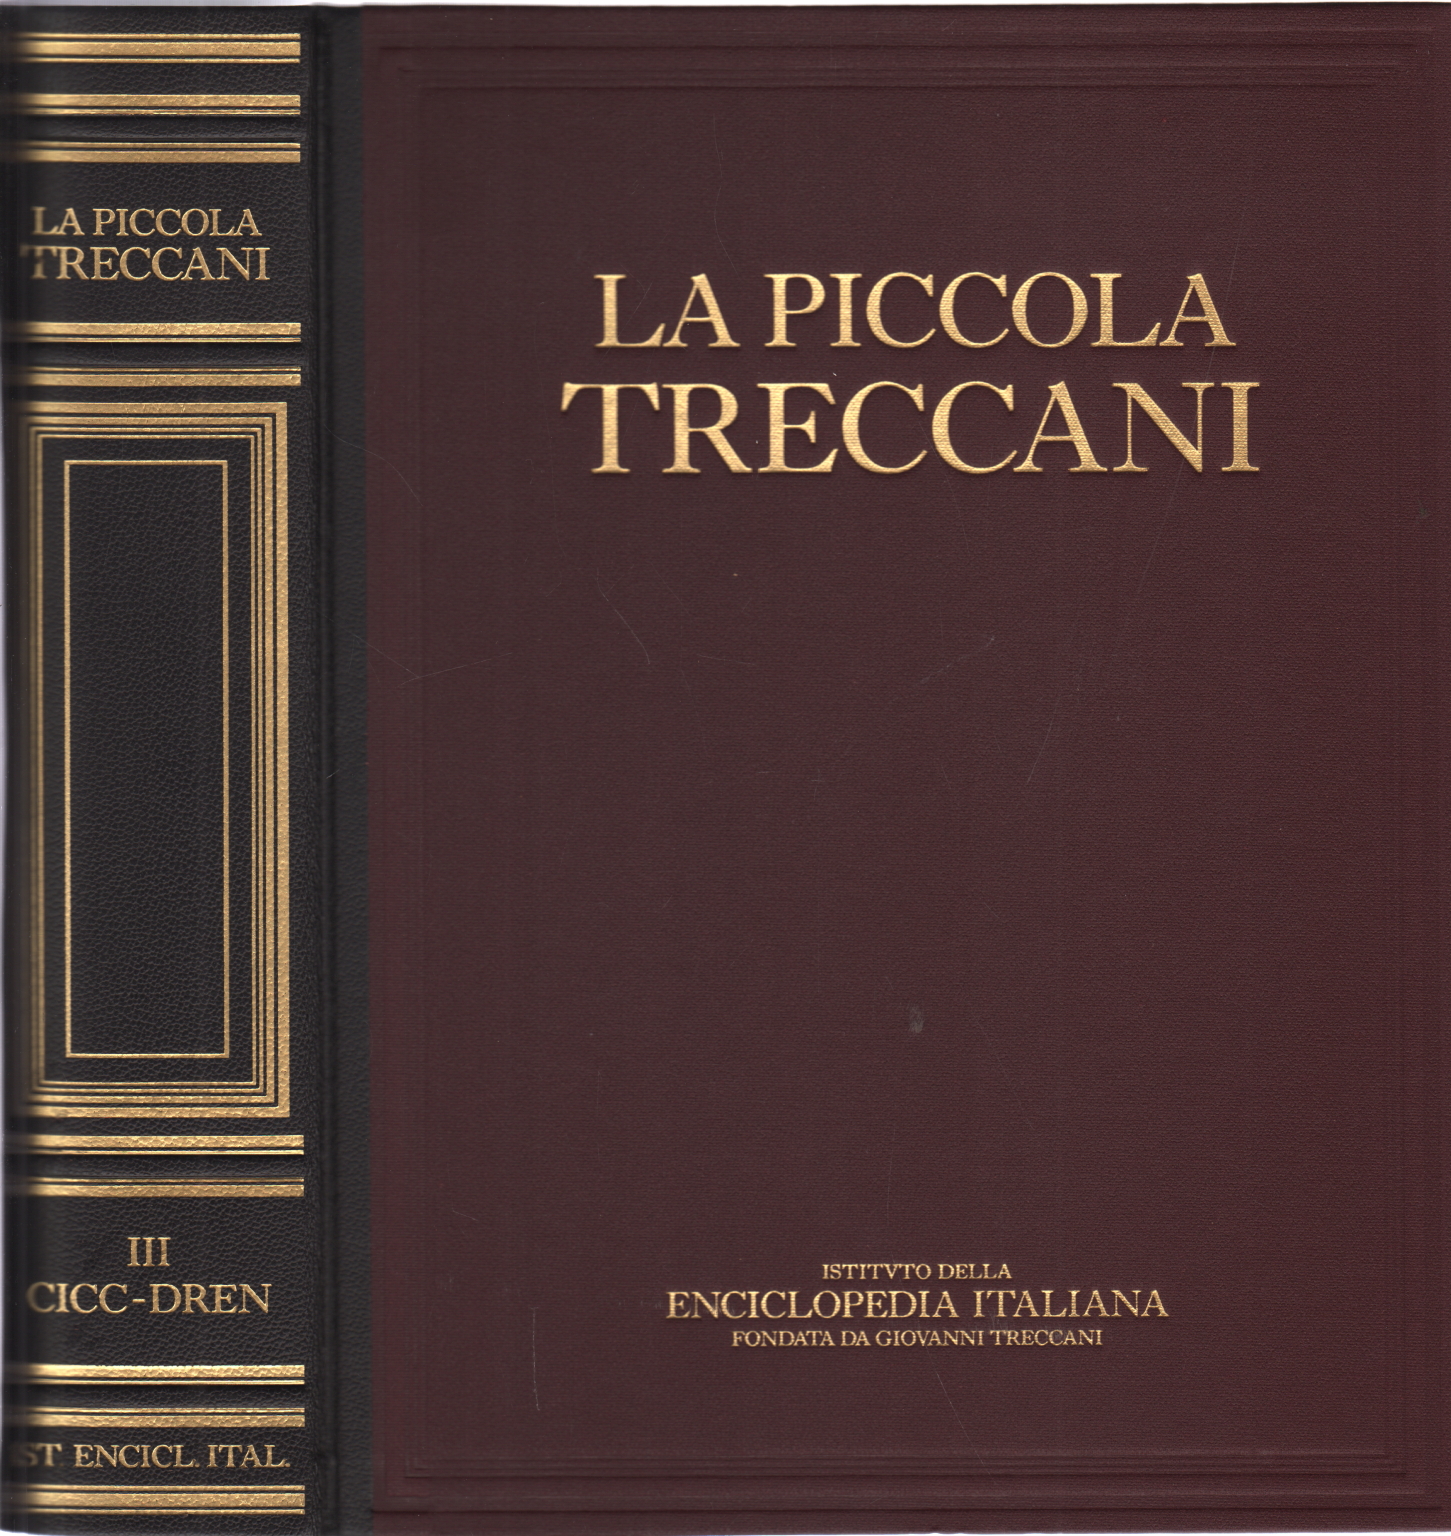 The Little Treccani III Cicc-Dren